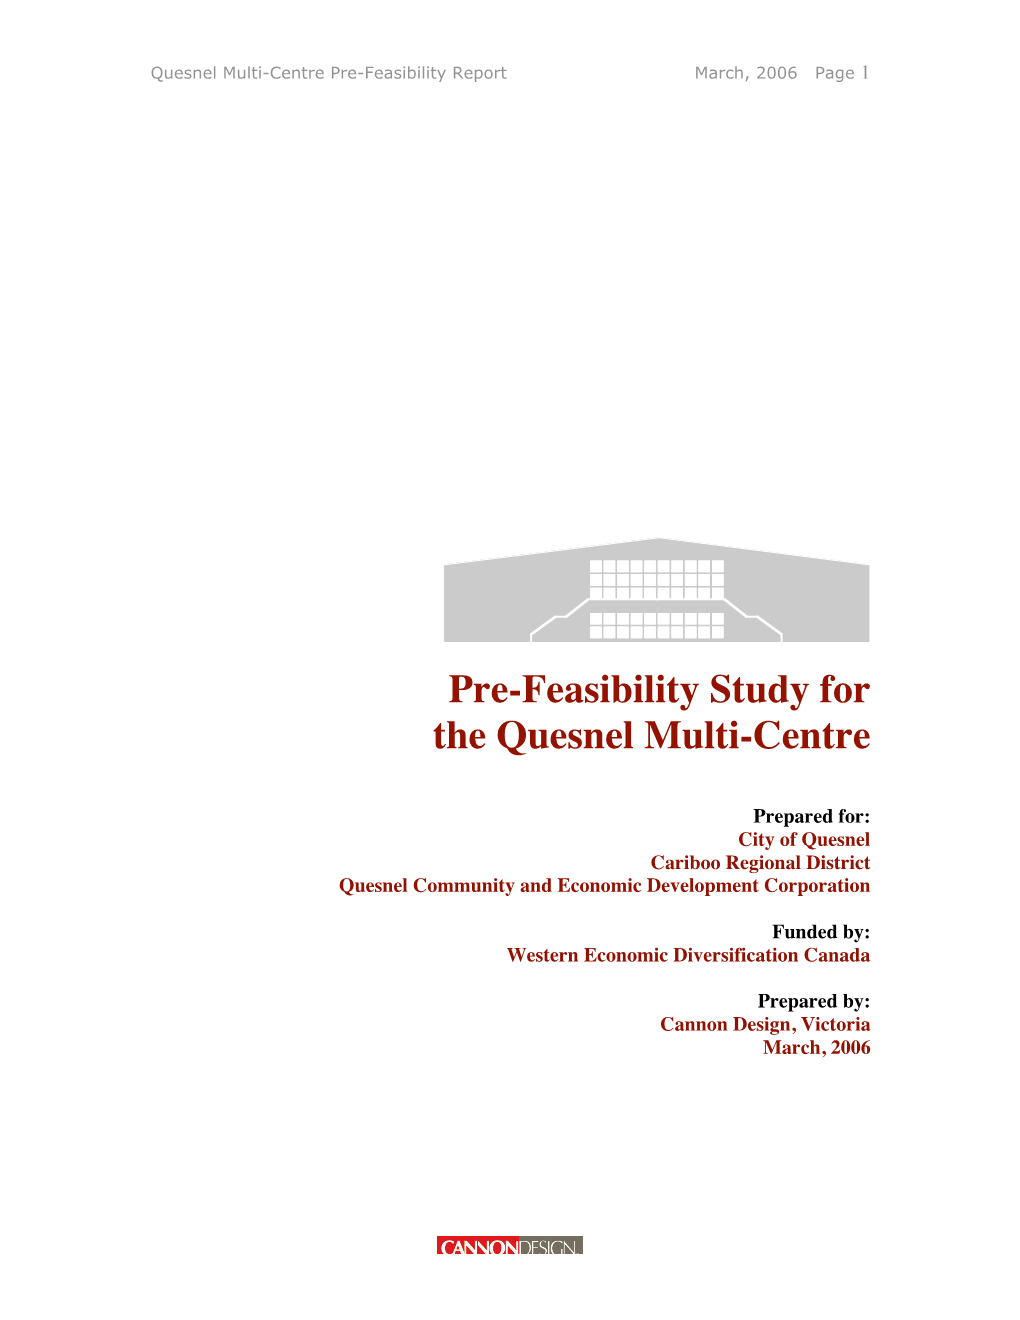 Pre-Feasibility Study for the Quesnel Multi-Centre